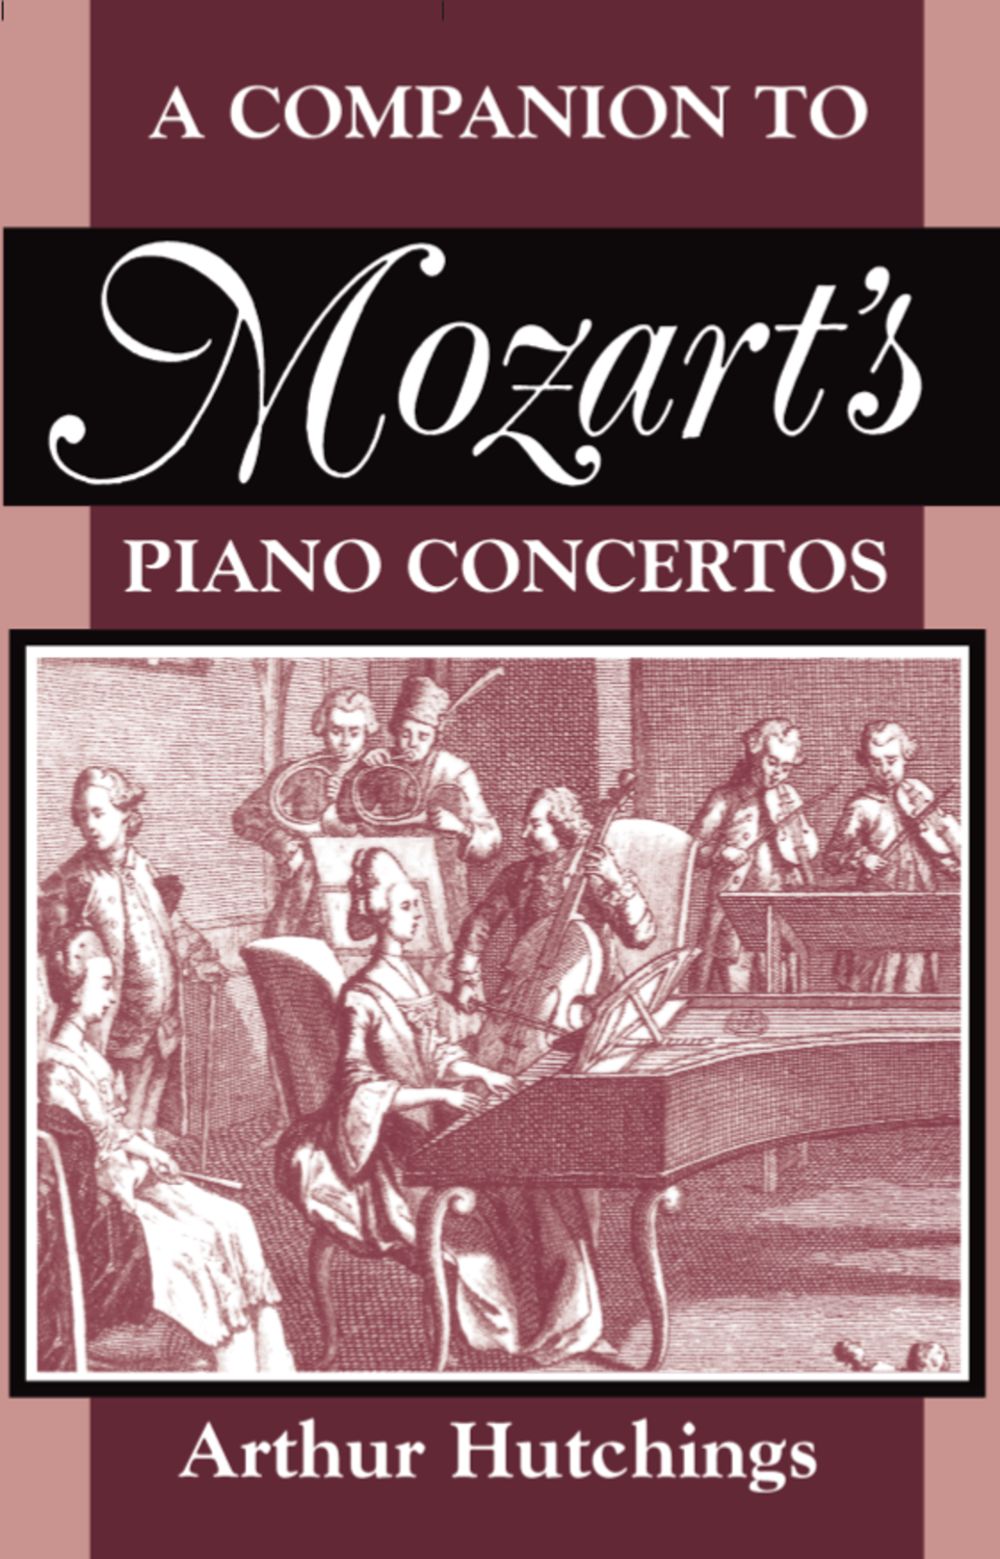 Hutchings Companion To Mozarts Piano Concertos Pb Sheet Music Songbook